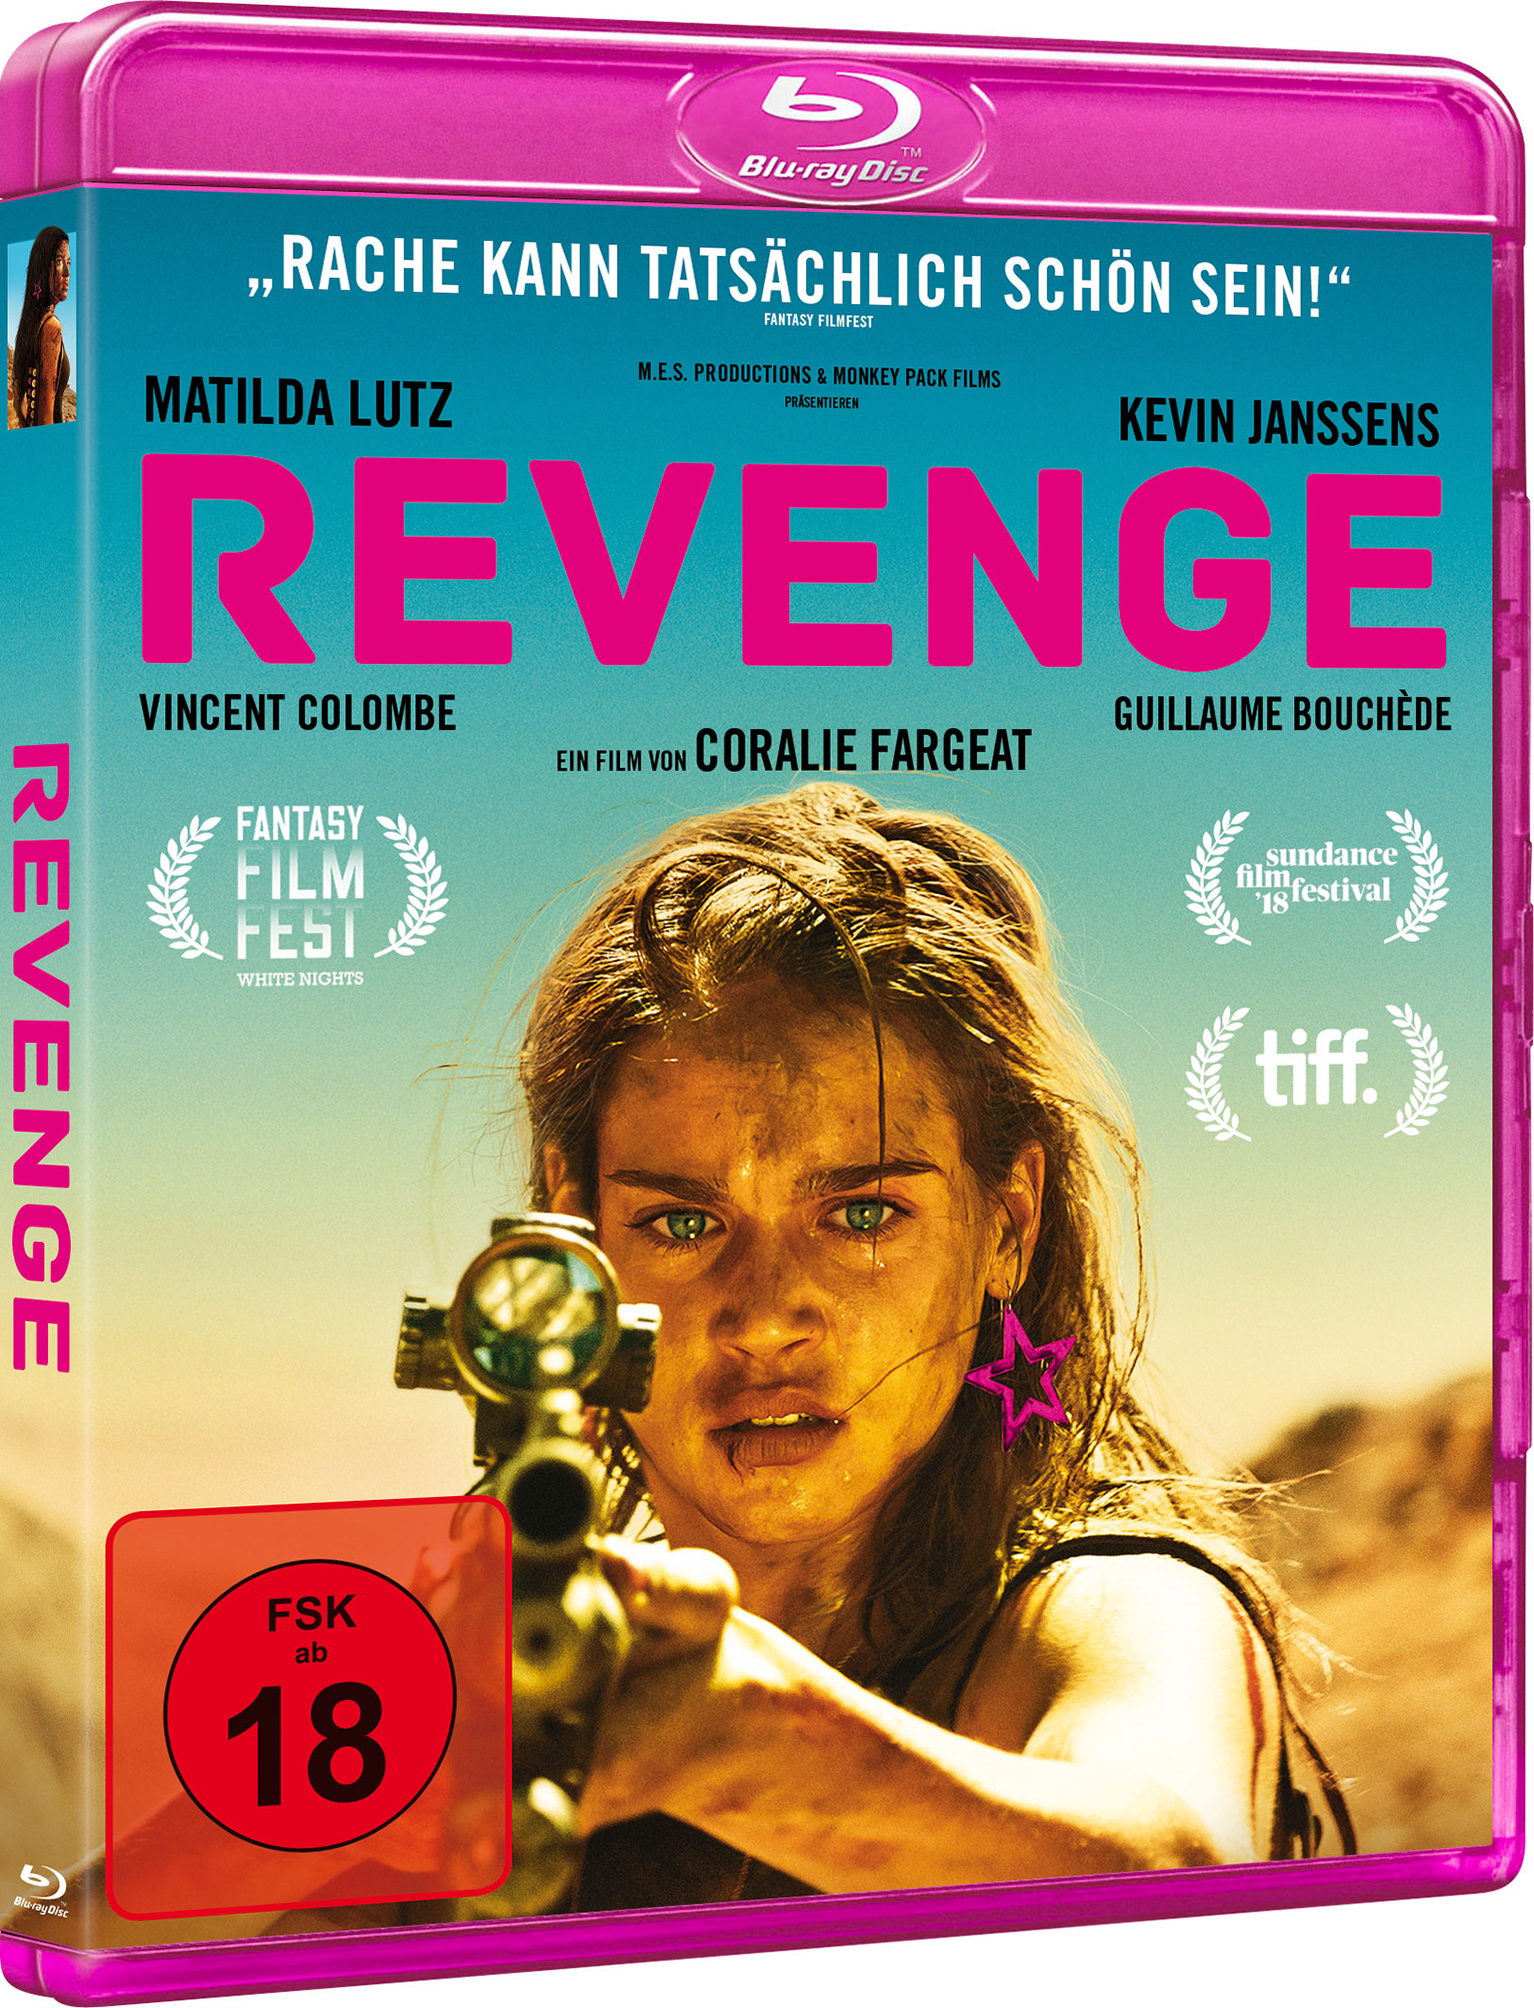 Revenge (Blu-ray)  Image 2